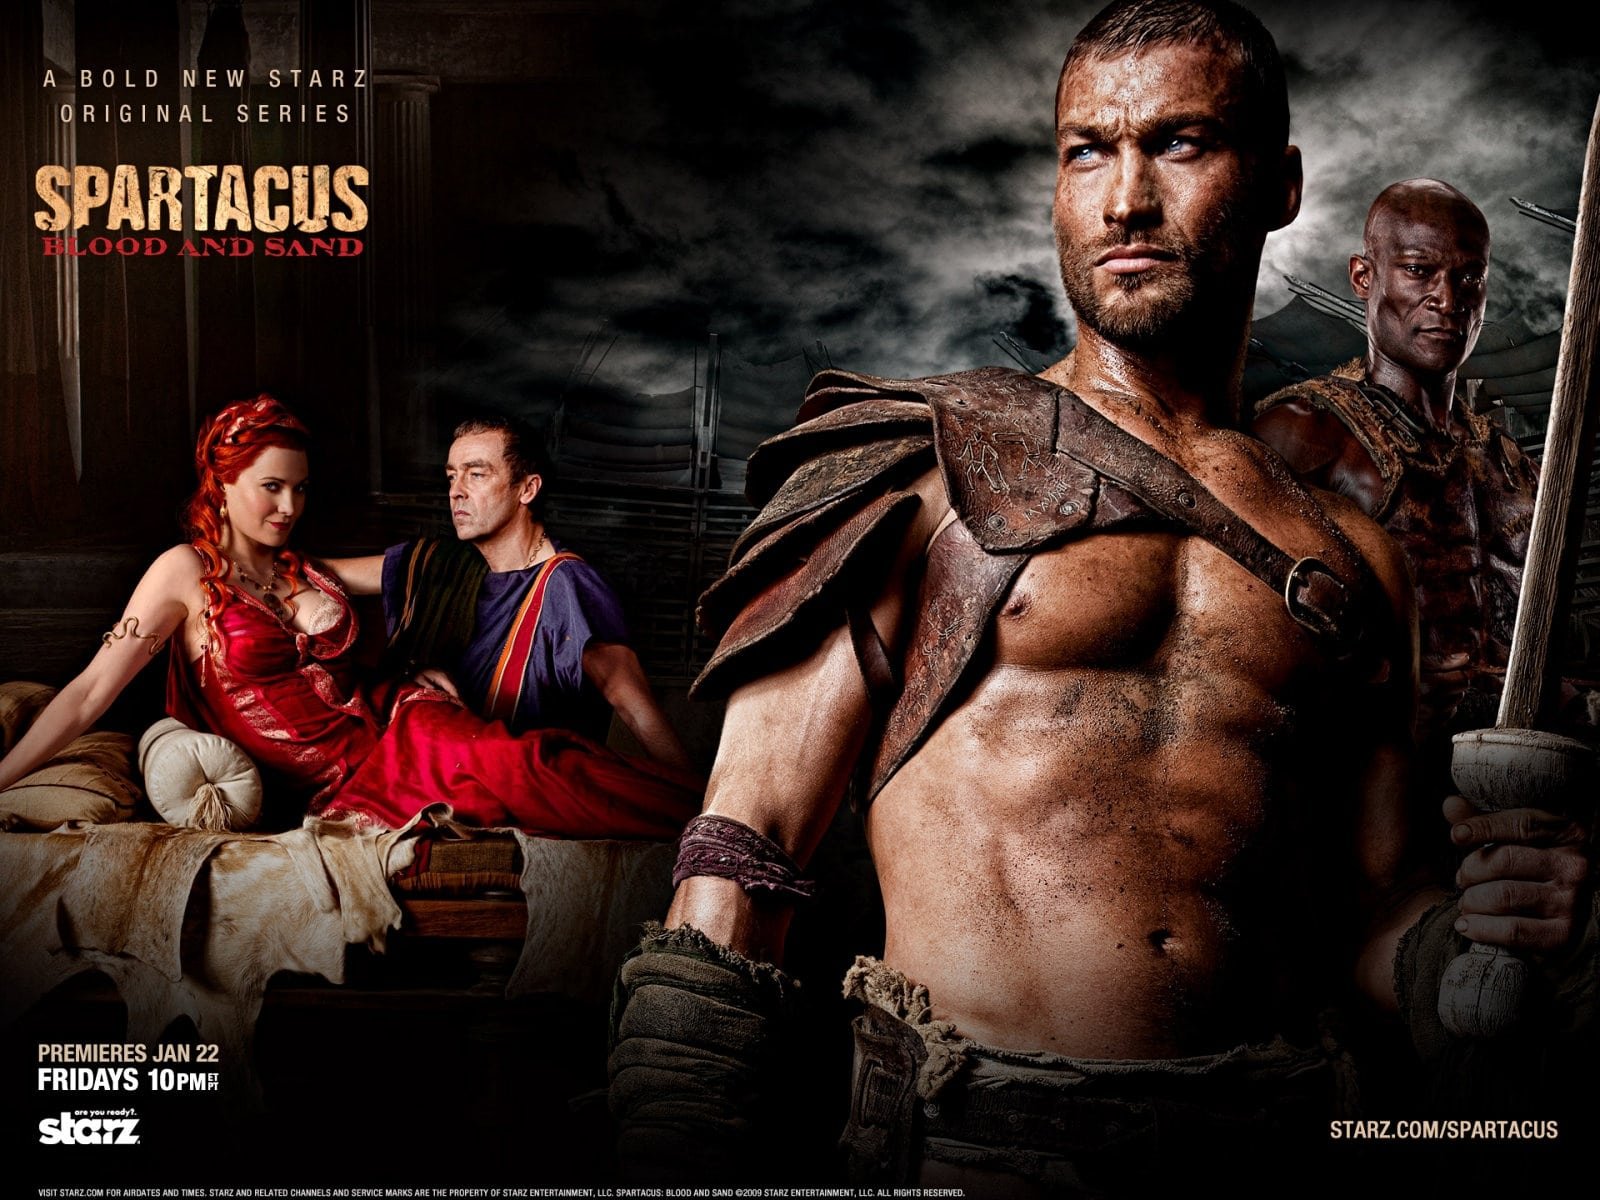 spartacus season 1